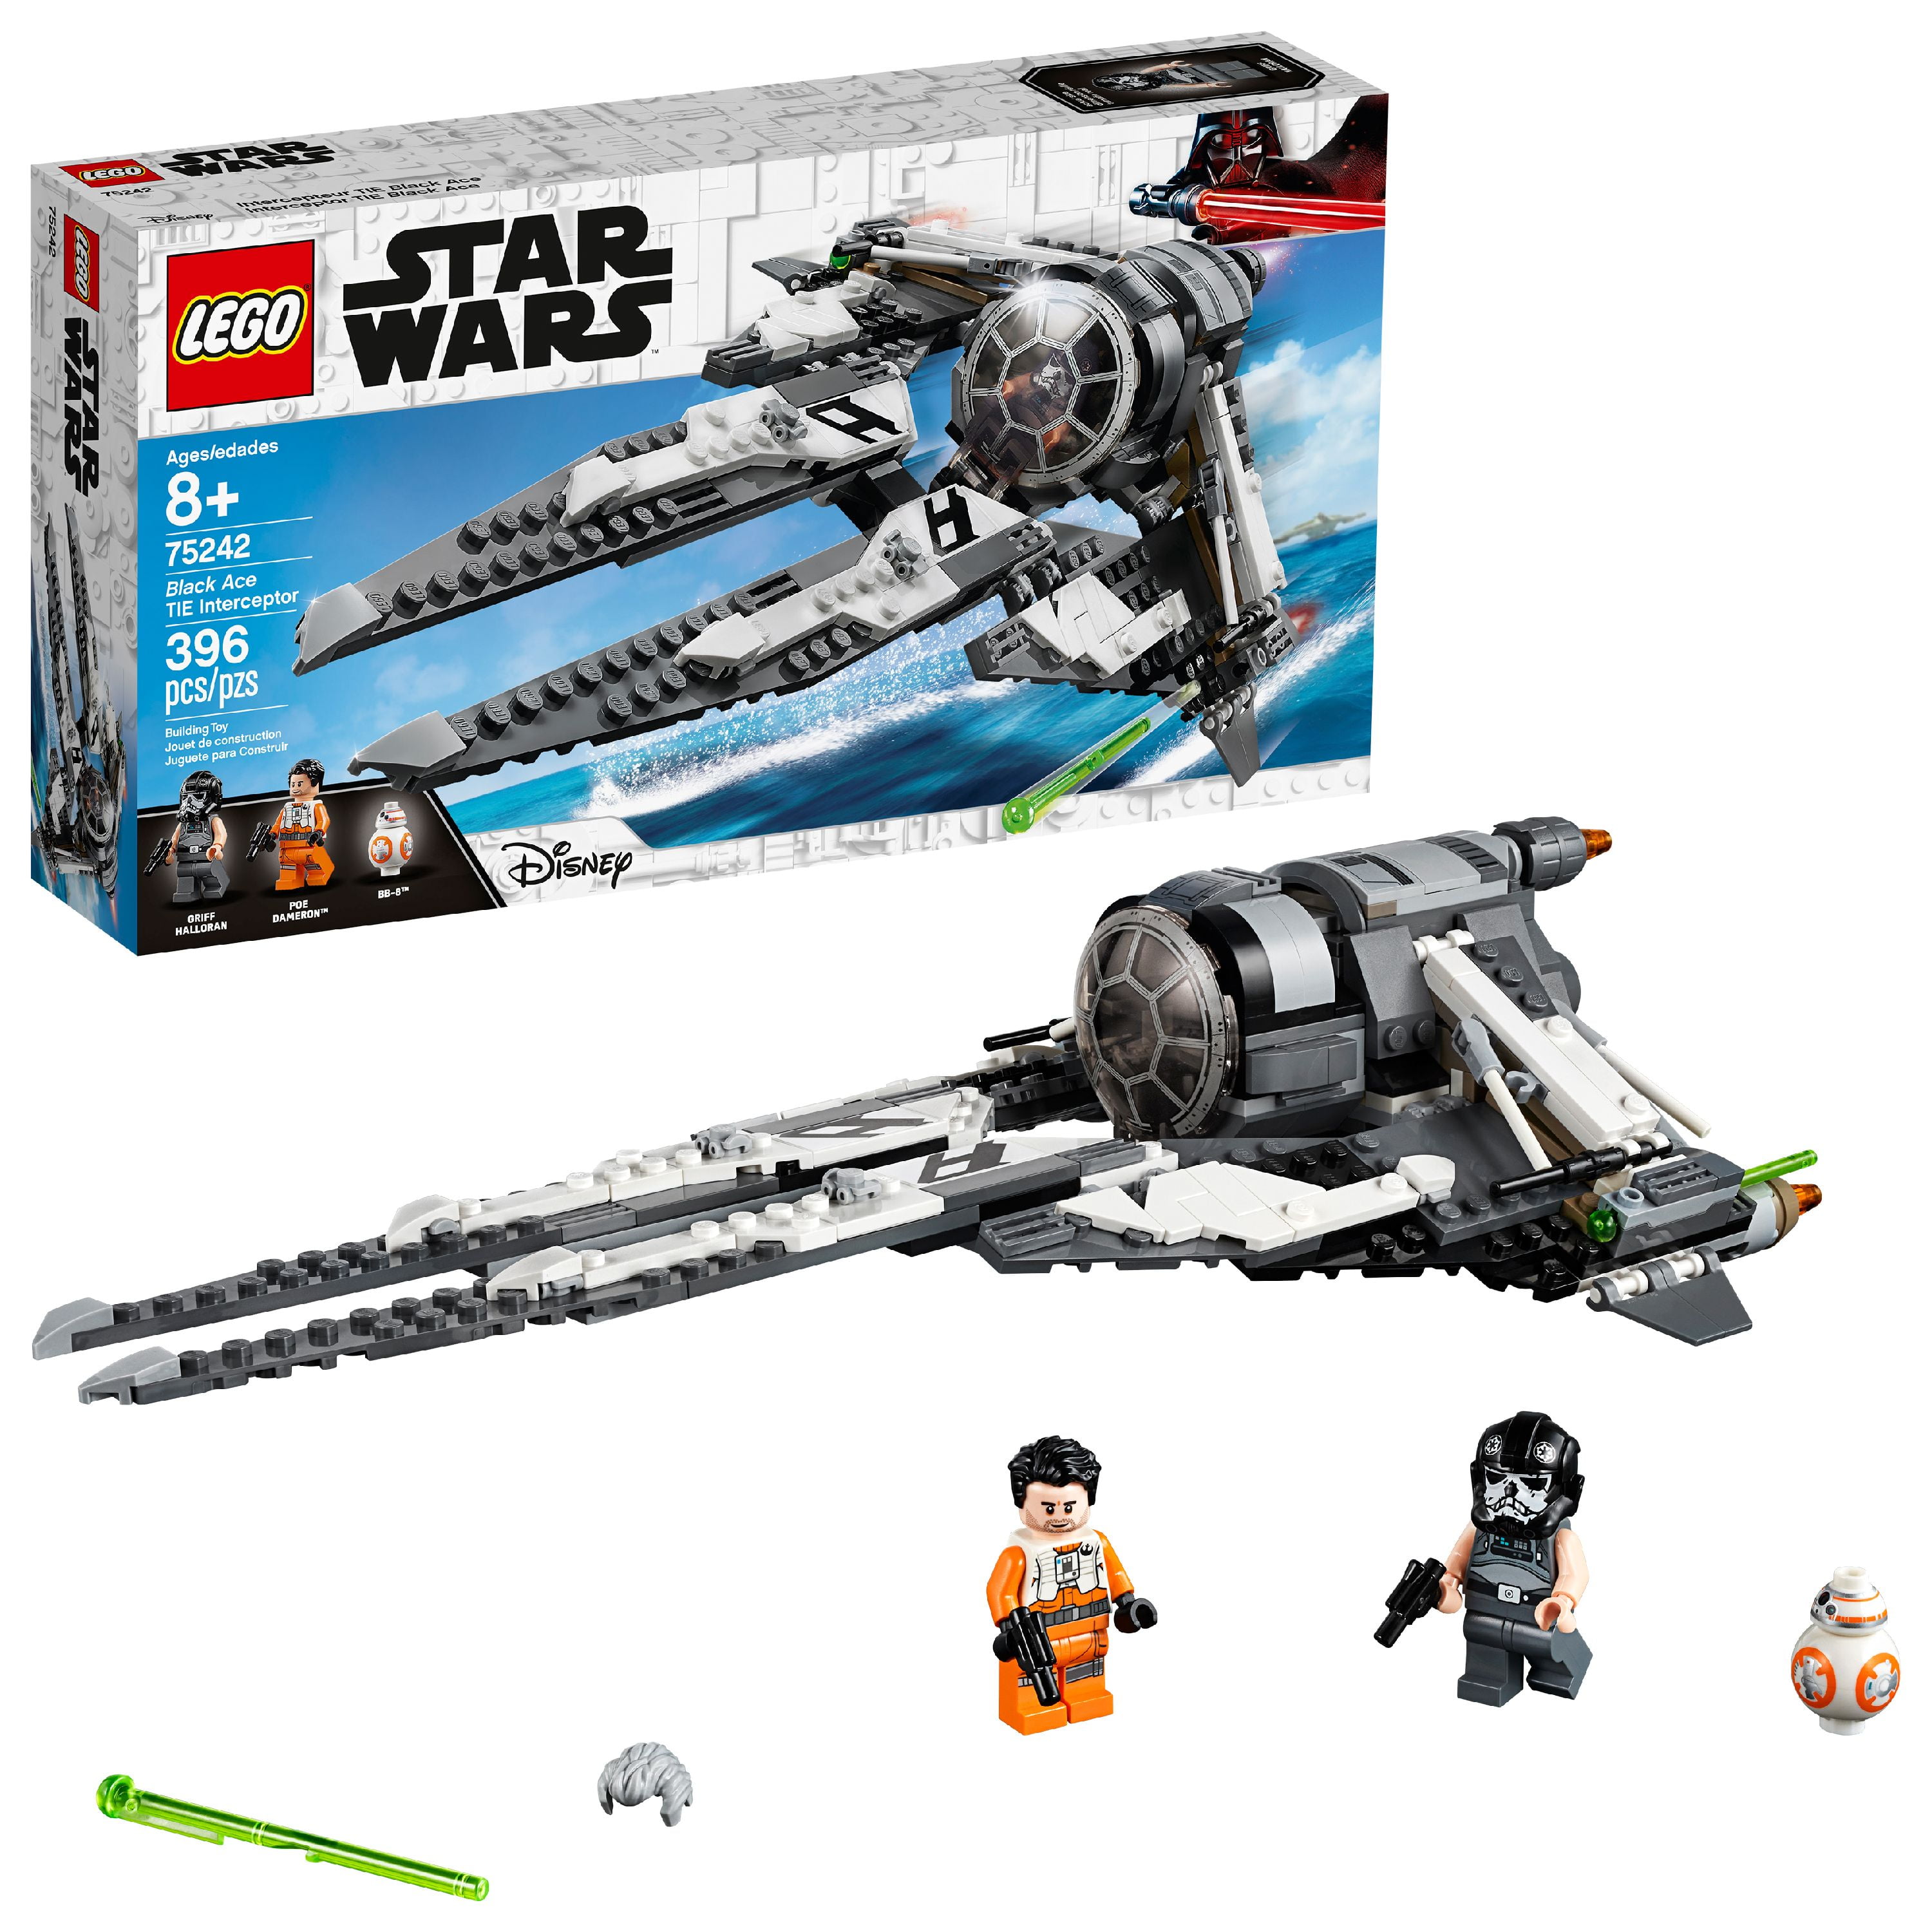 Lego ® Star Wars ™ Figurine Handle Halloran sw1018 from 75242 Black Ace TIE BRAND NEW 